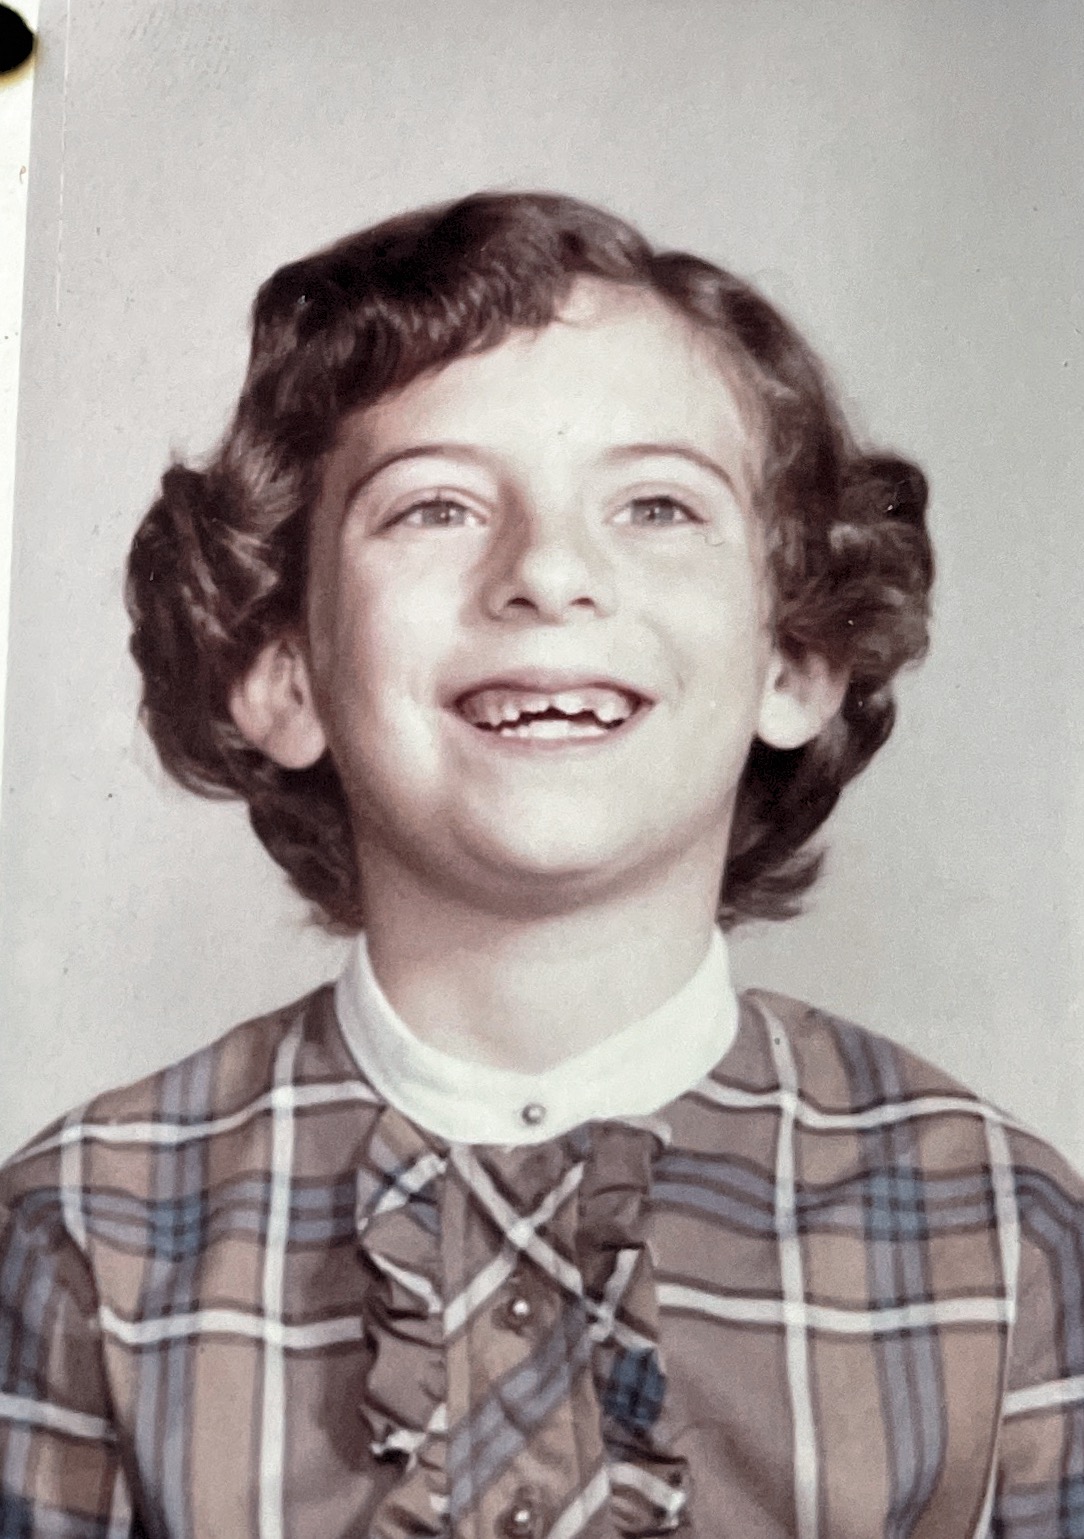 Jan in first grade
1959-60